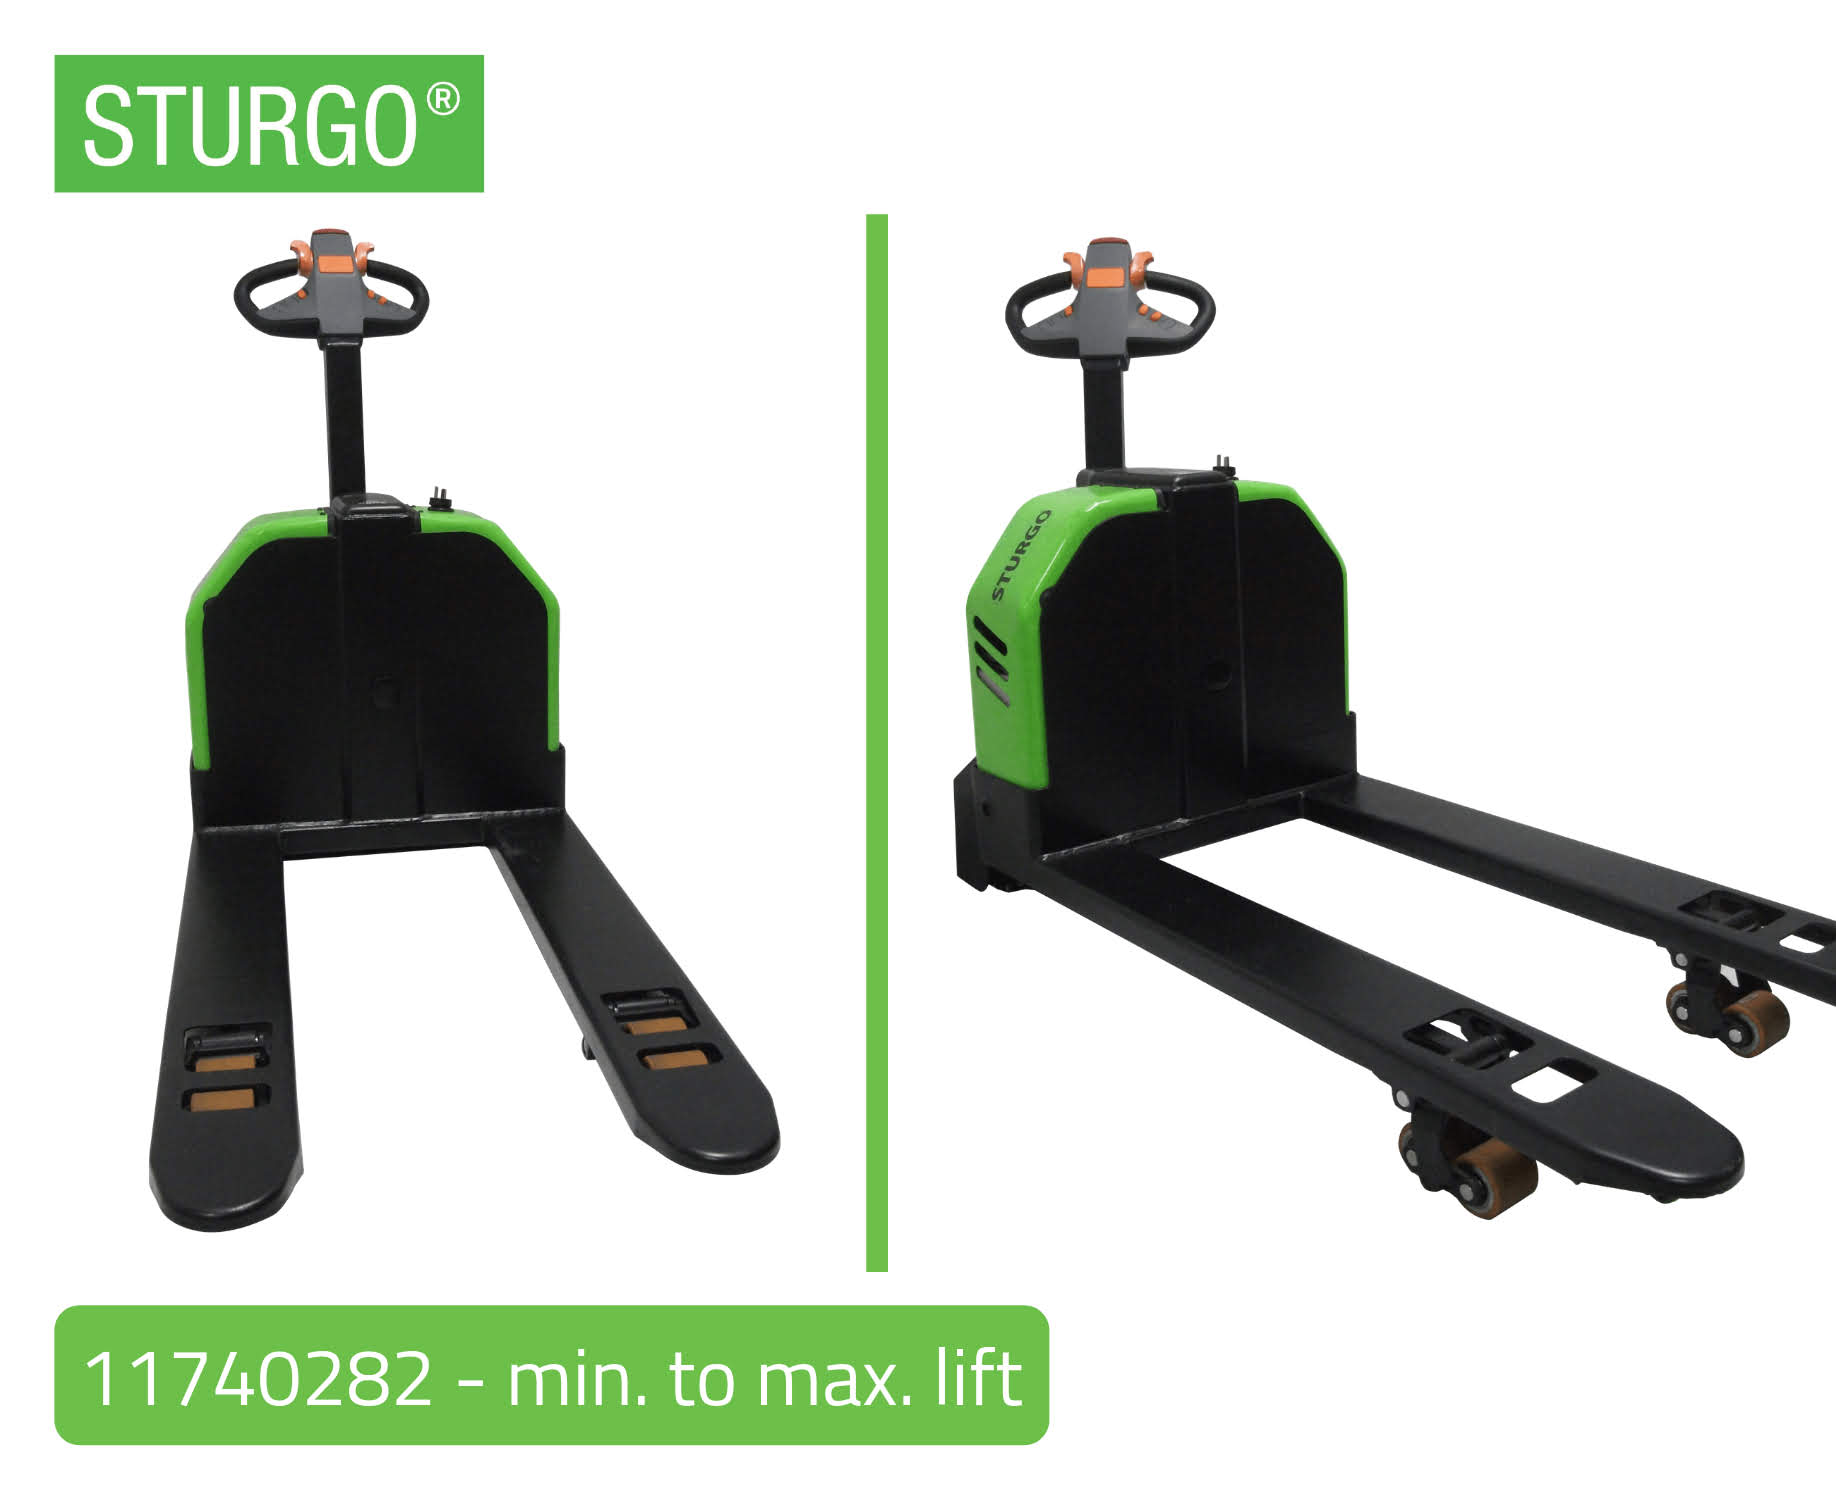 STURGO® Compact Electric Pallet Jack 2T